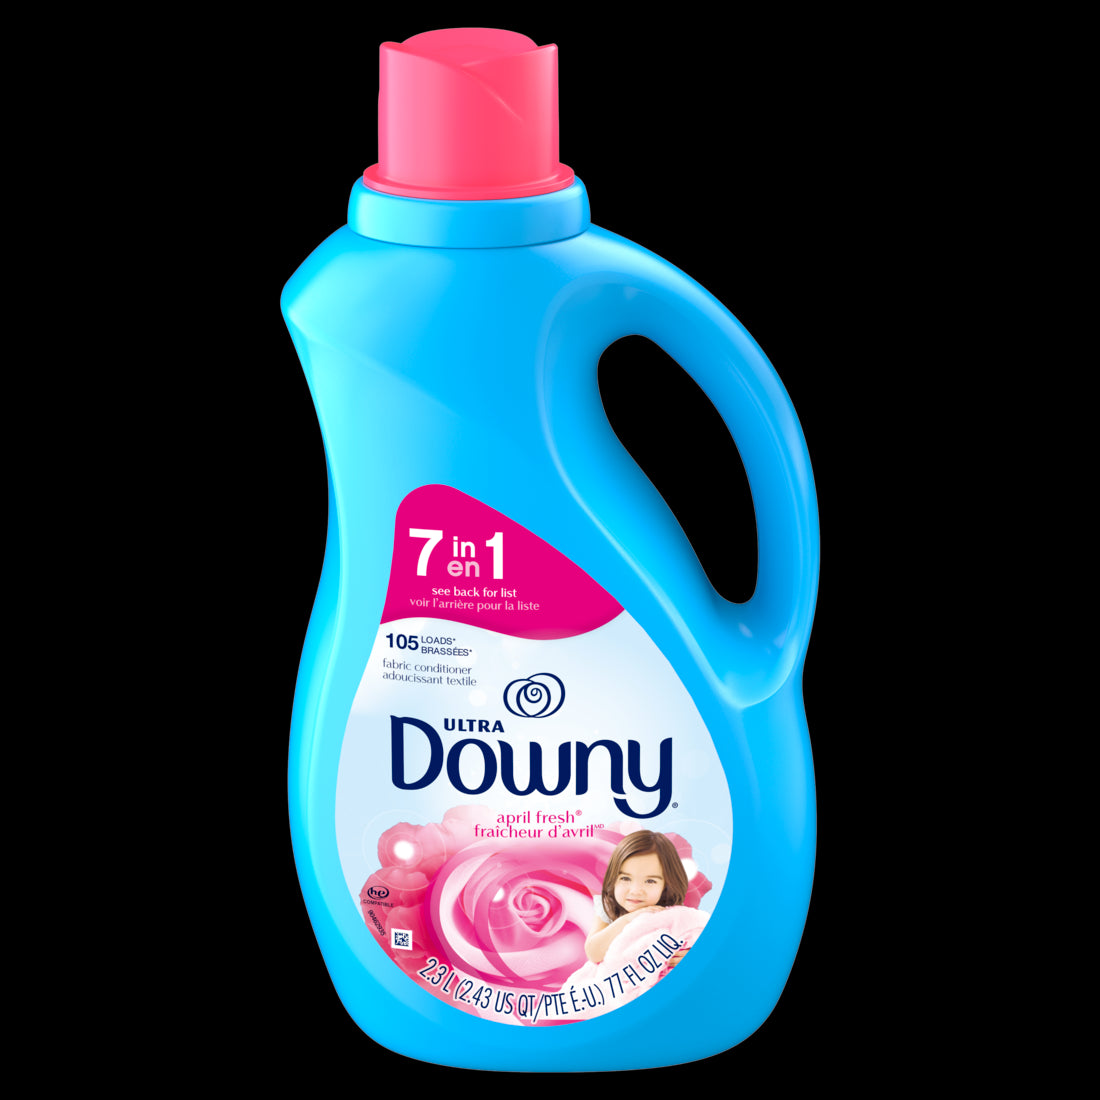 Downy Ultra Laundry Liquid Fabric Softener April Fresh - 77oz/105loads/4pk